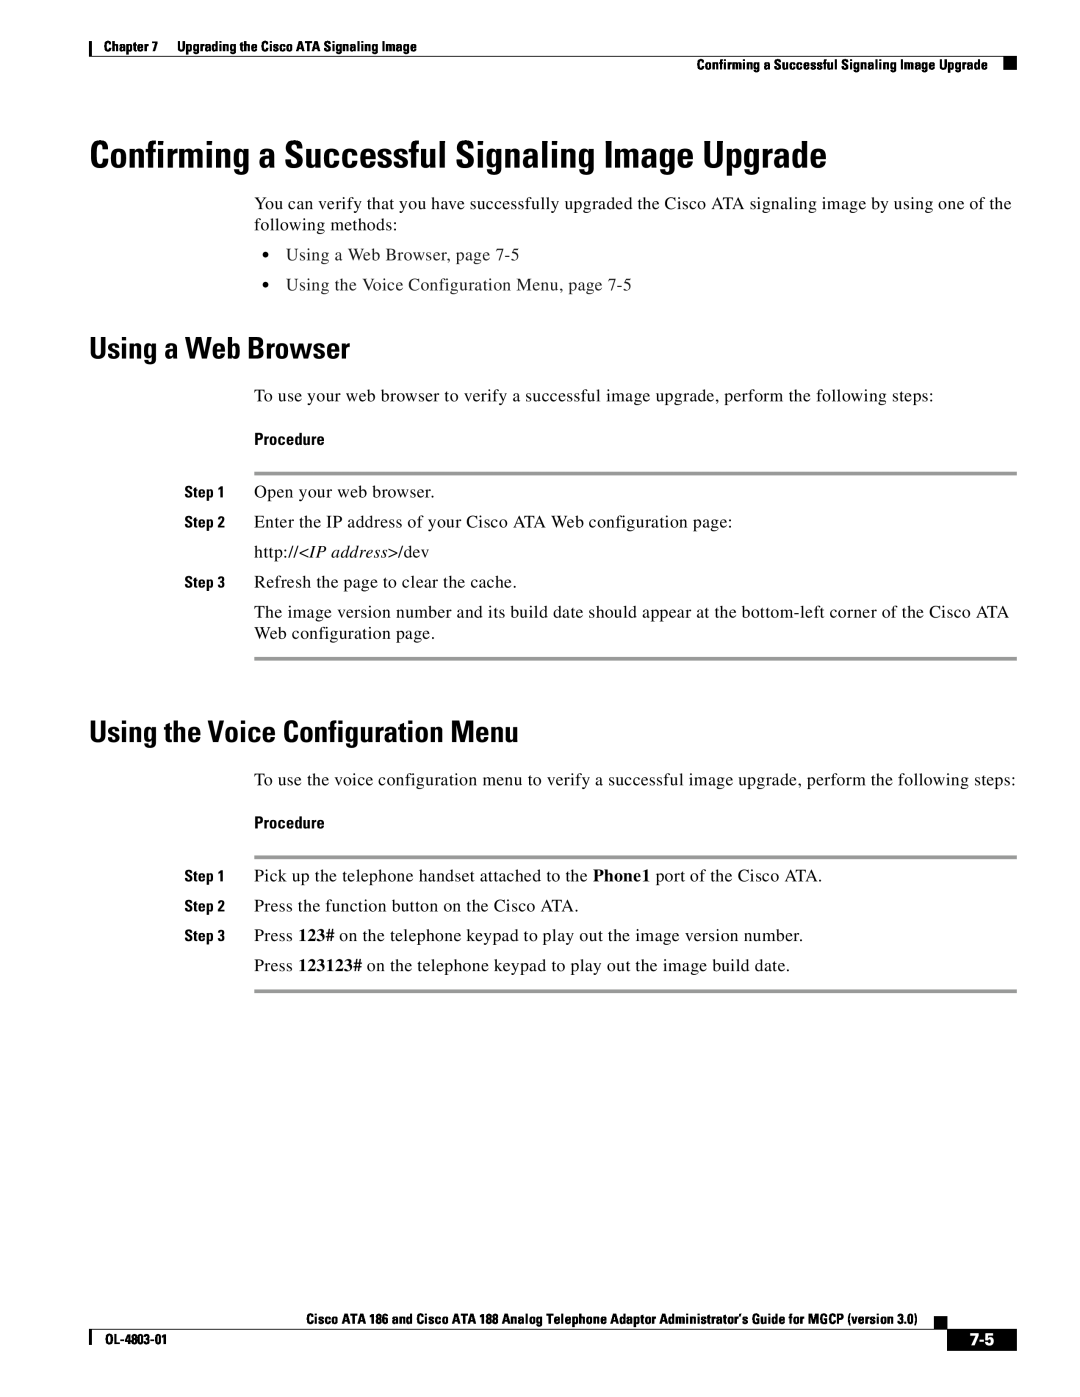 Cisco Systems ATA 188, ATA 186 manual Confirming a Successful Signaling Image Upgrade, Using a Web Browser, Procedure 